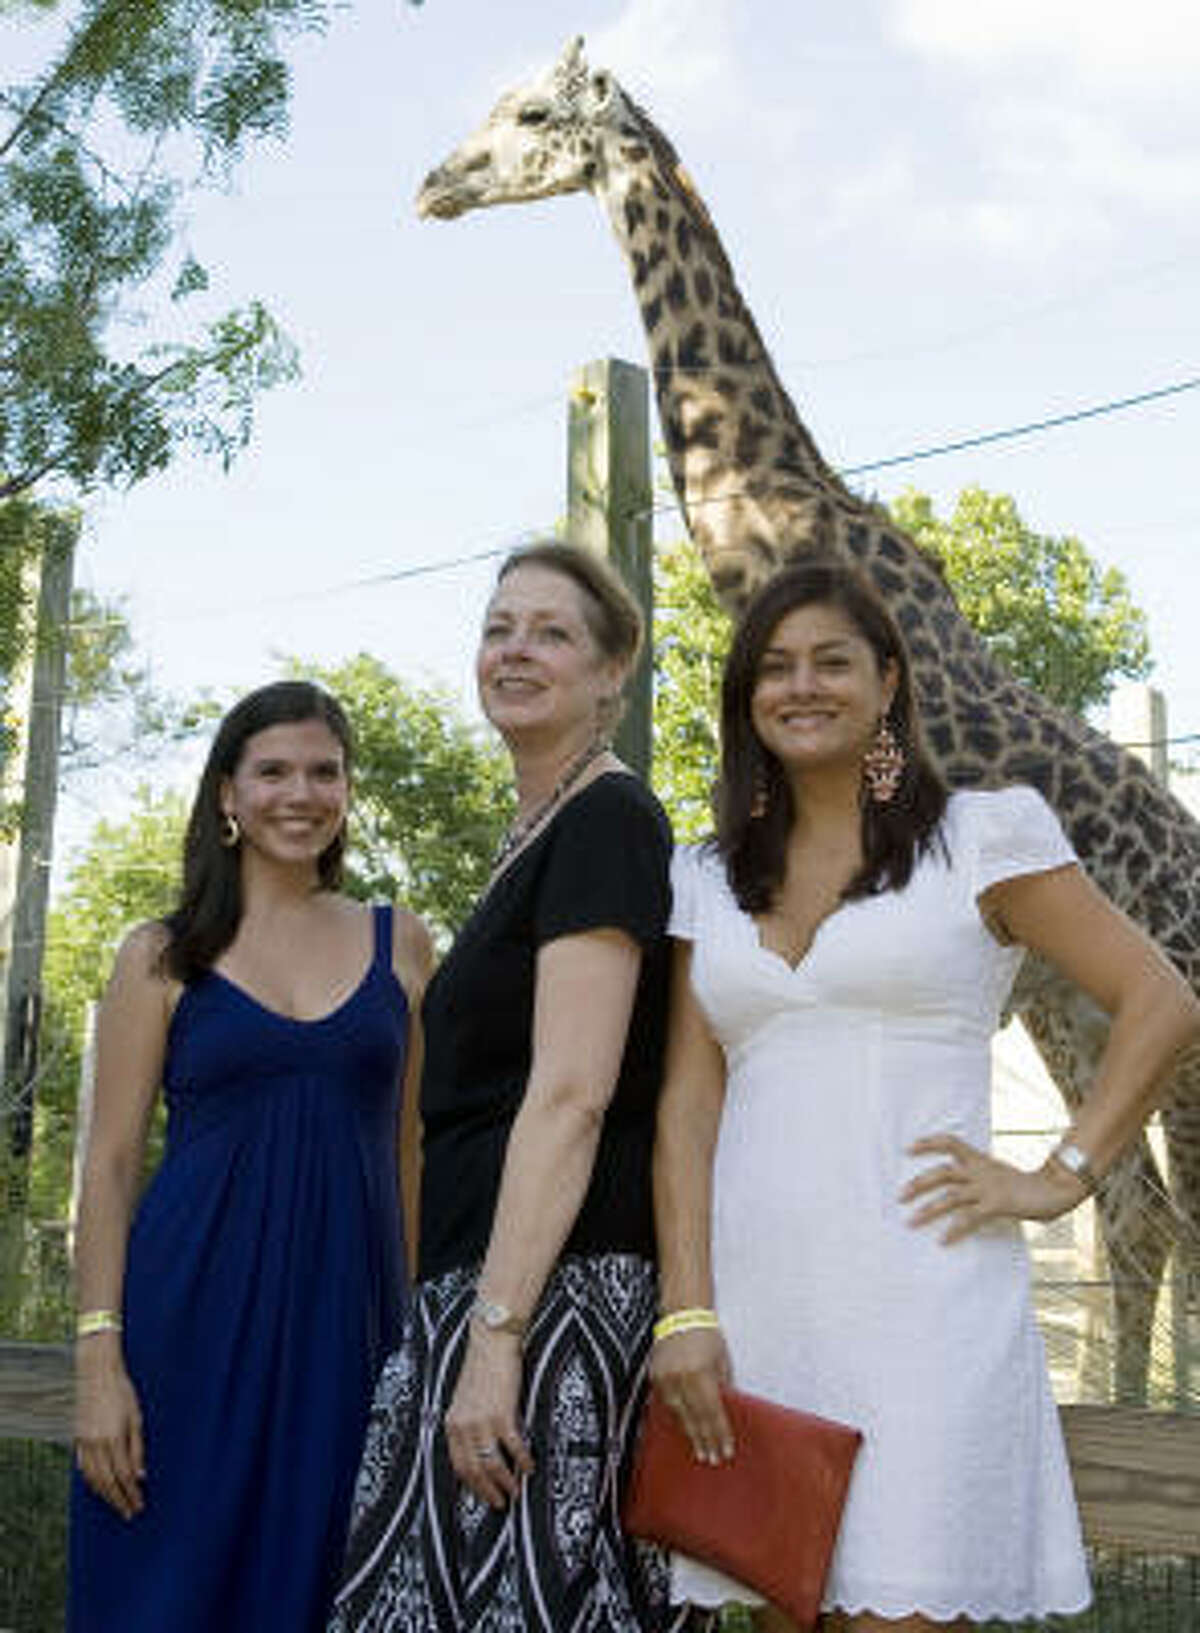 Joining the Houston Zoo’s Flock party were advisory committee member Gloria Luna, from left, Zoo CEO Deobrah Cannon and advisory committee member Katherine Orellana.